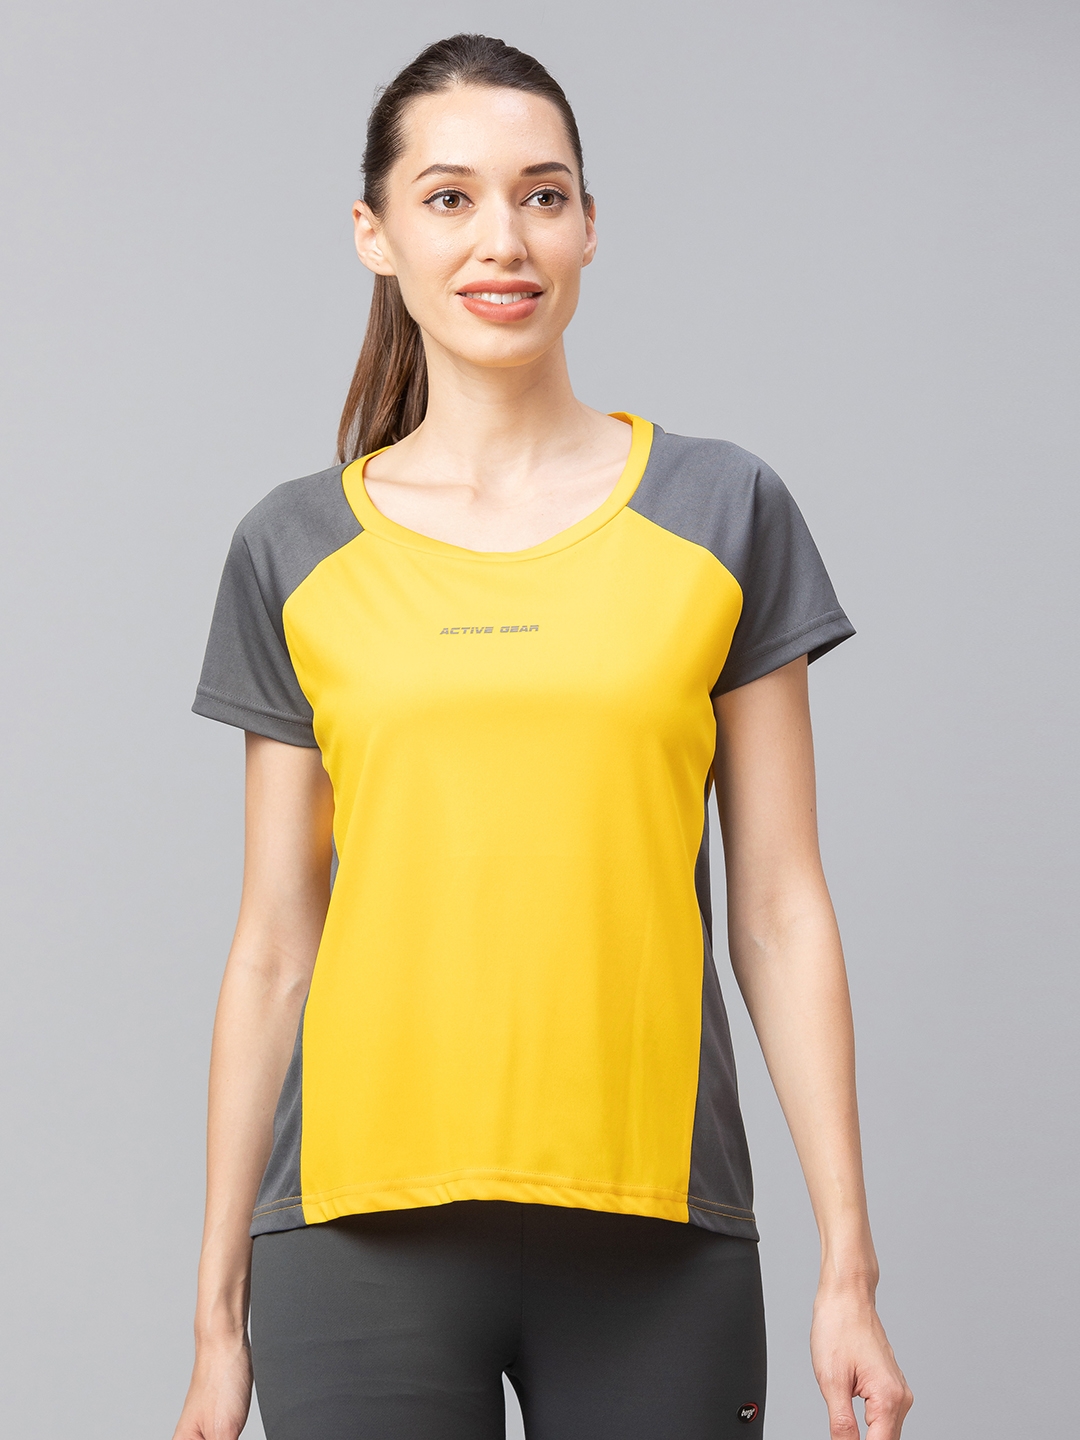 globus | Globus Yellow Colourblocked Tshirt